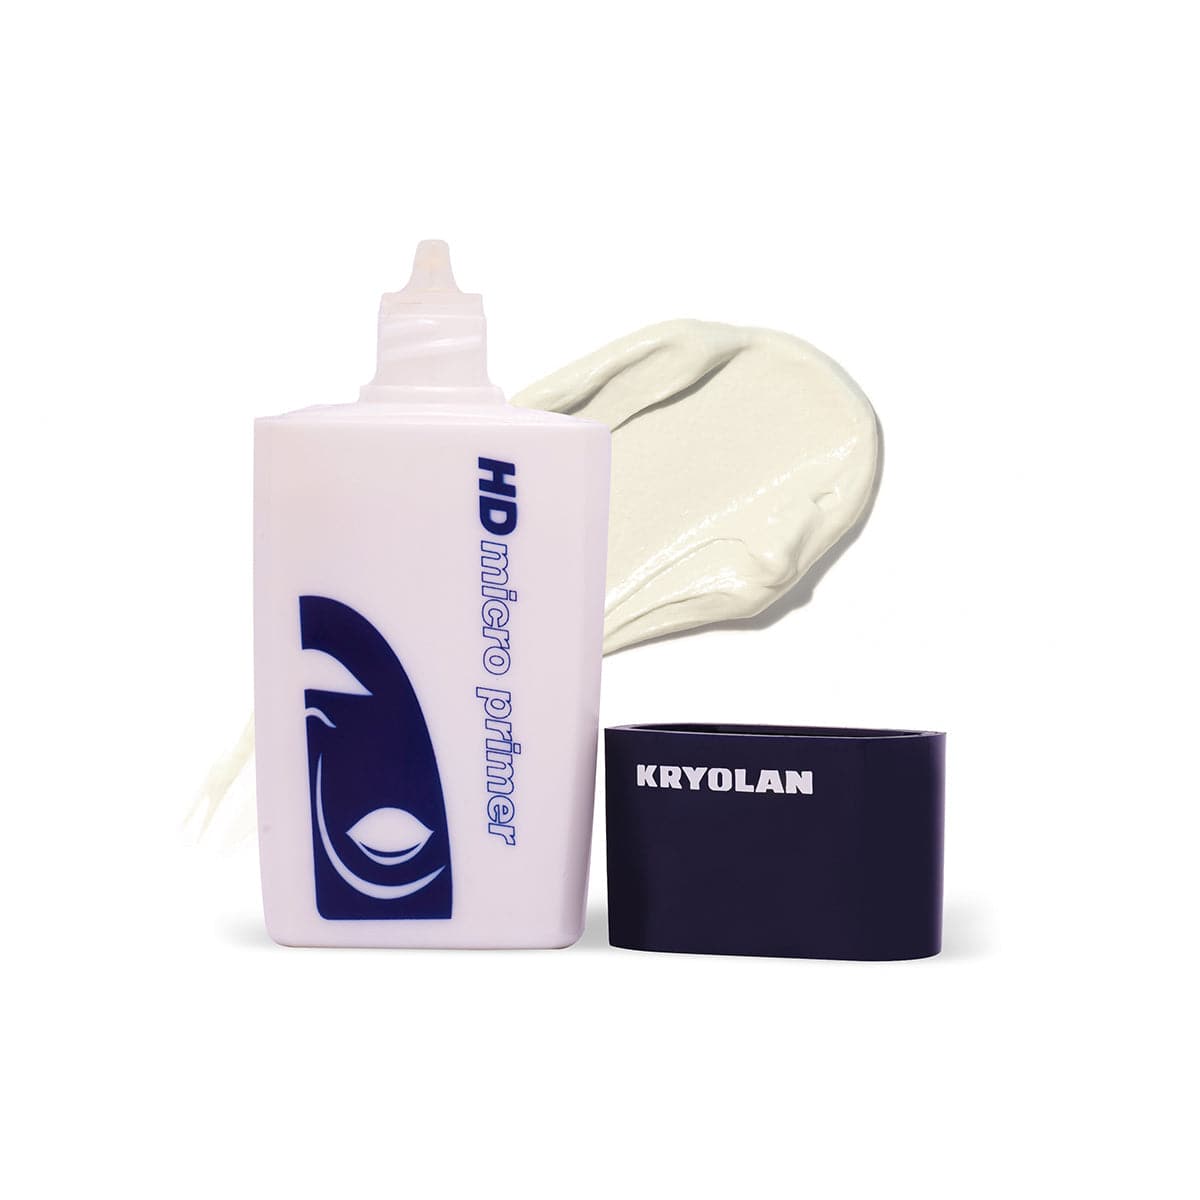 Kryolan Hd Micro Primer - Premium Health & Beauty from Kryolan - Just Rs 6500.00! Shop now at Cozmetica